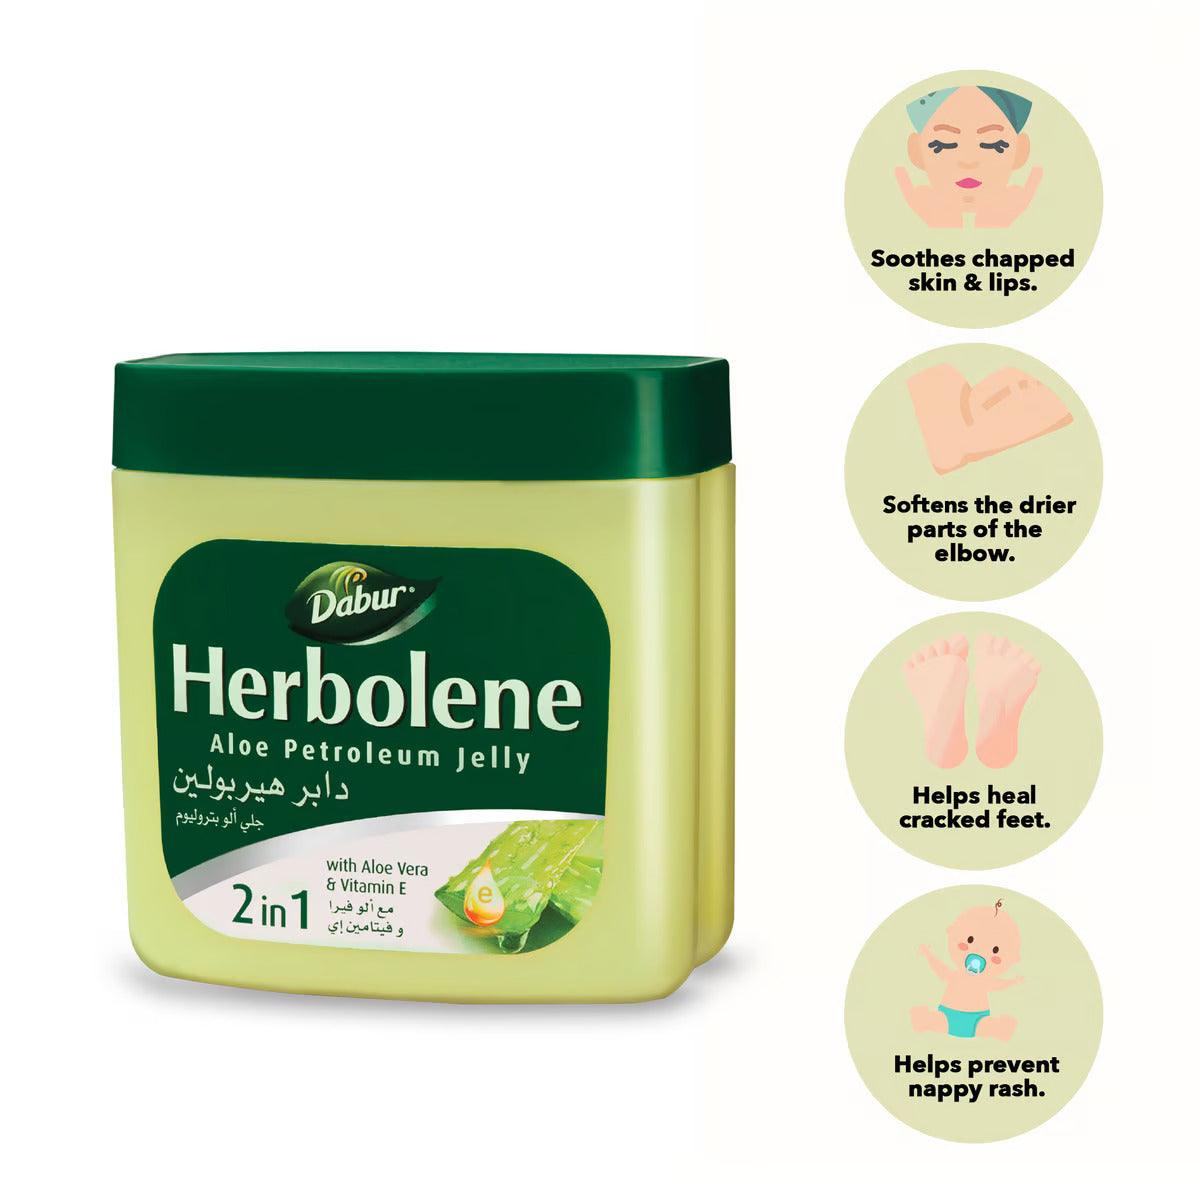 Dabur Herbolene Aloe Petroleum Jelly - Wellness Shoppee